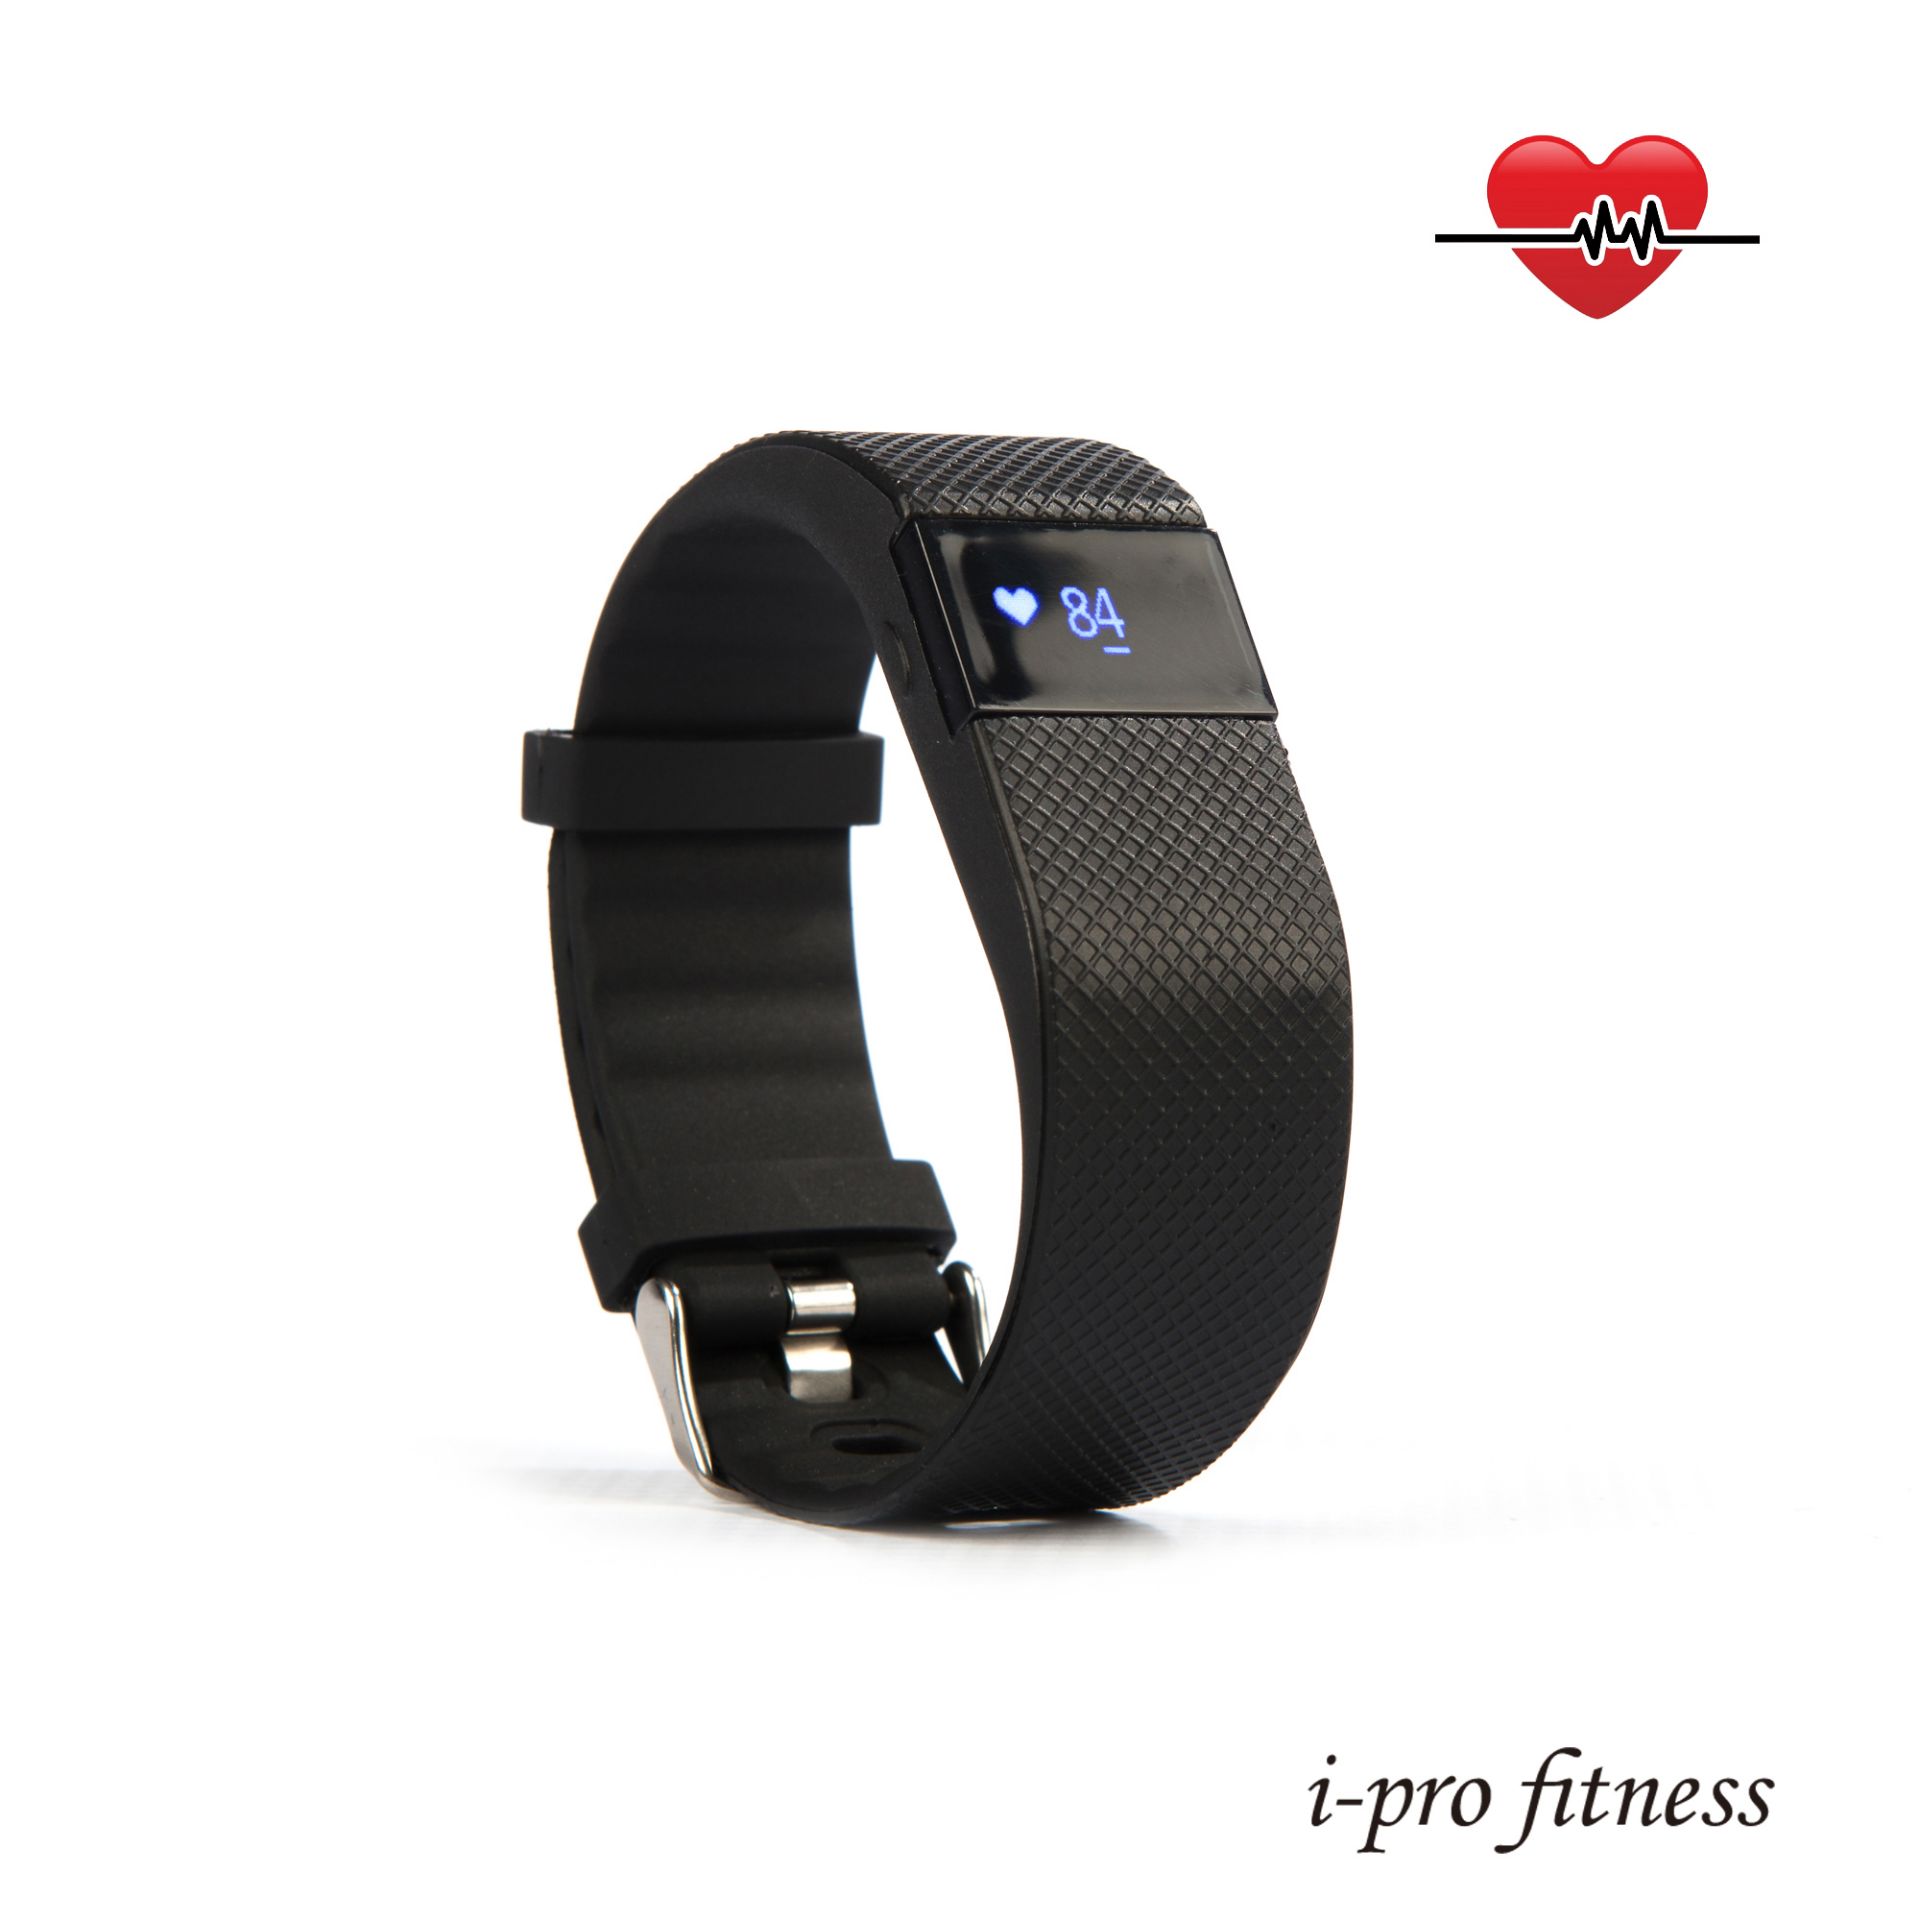 20x Fitness Tracker i-pro fitness, Bluetooth 4.0 Sports Smart Bracelet. - Image 4 of 8